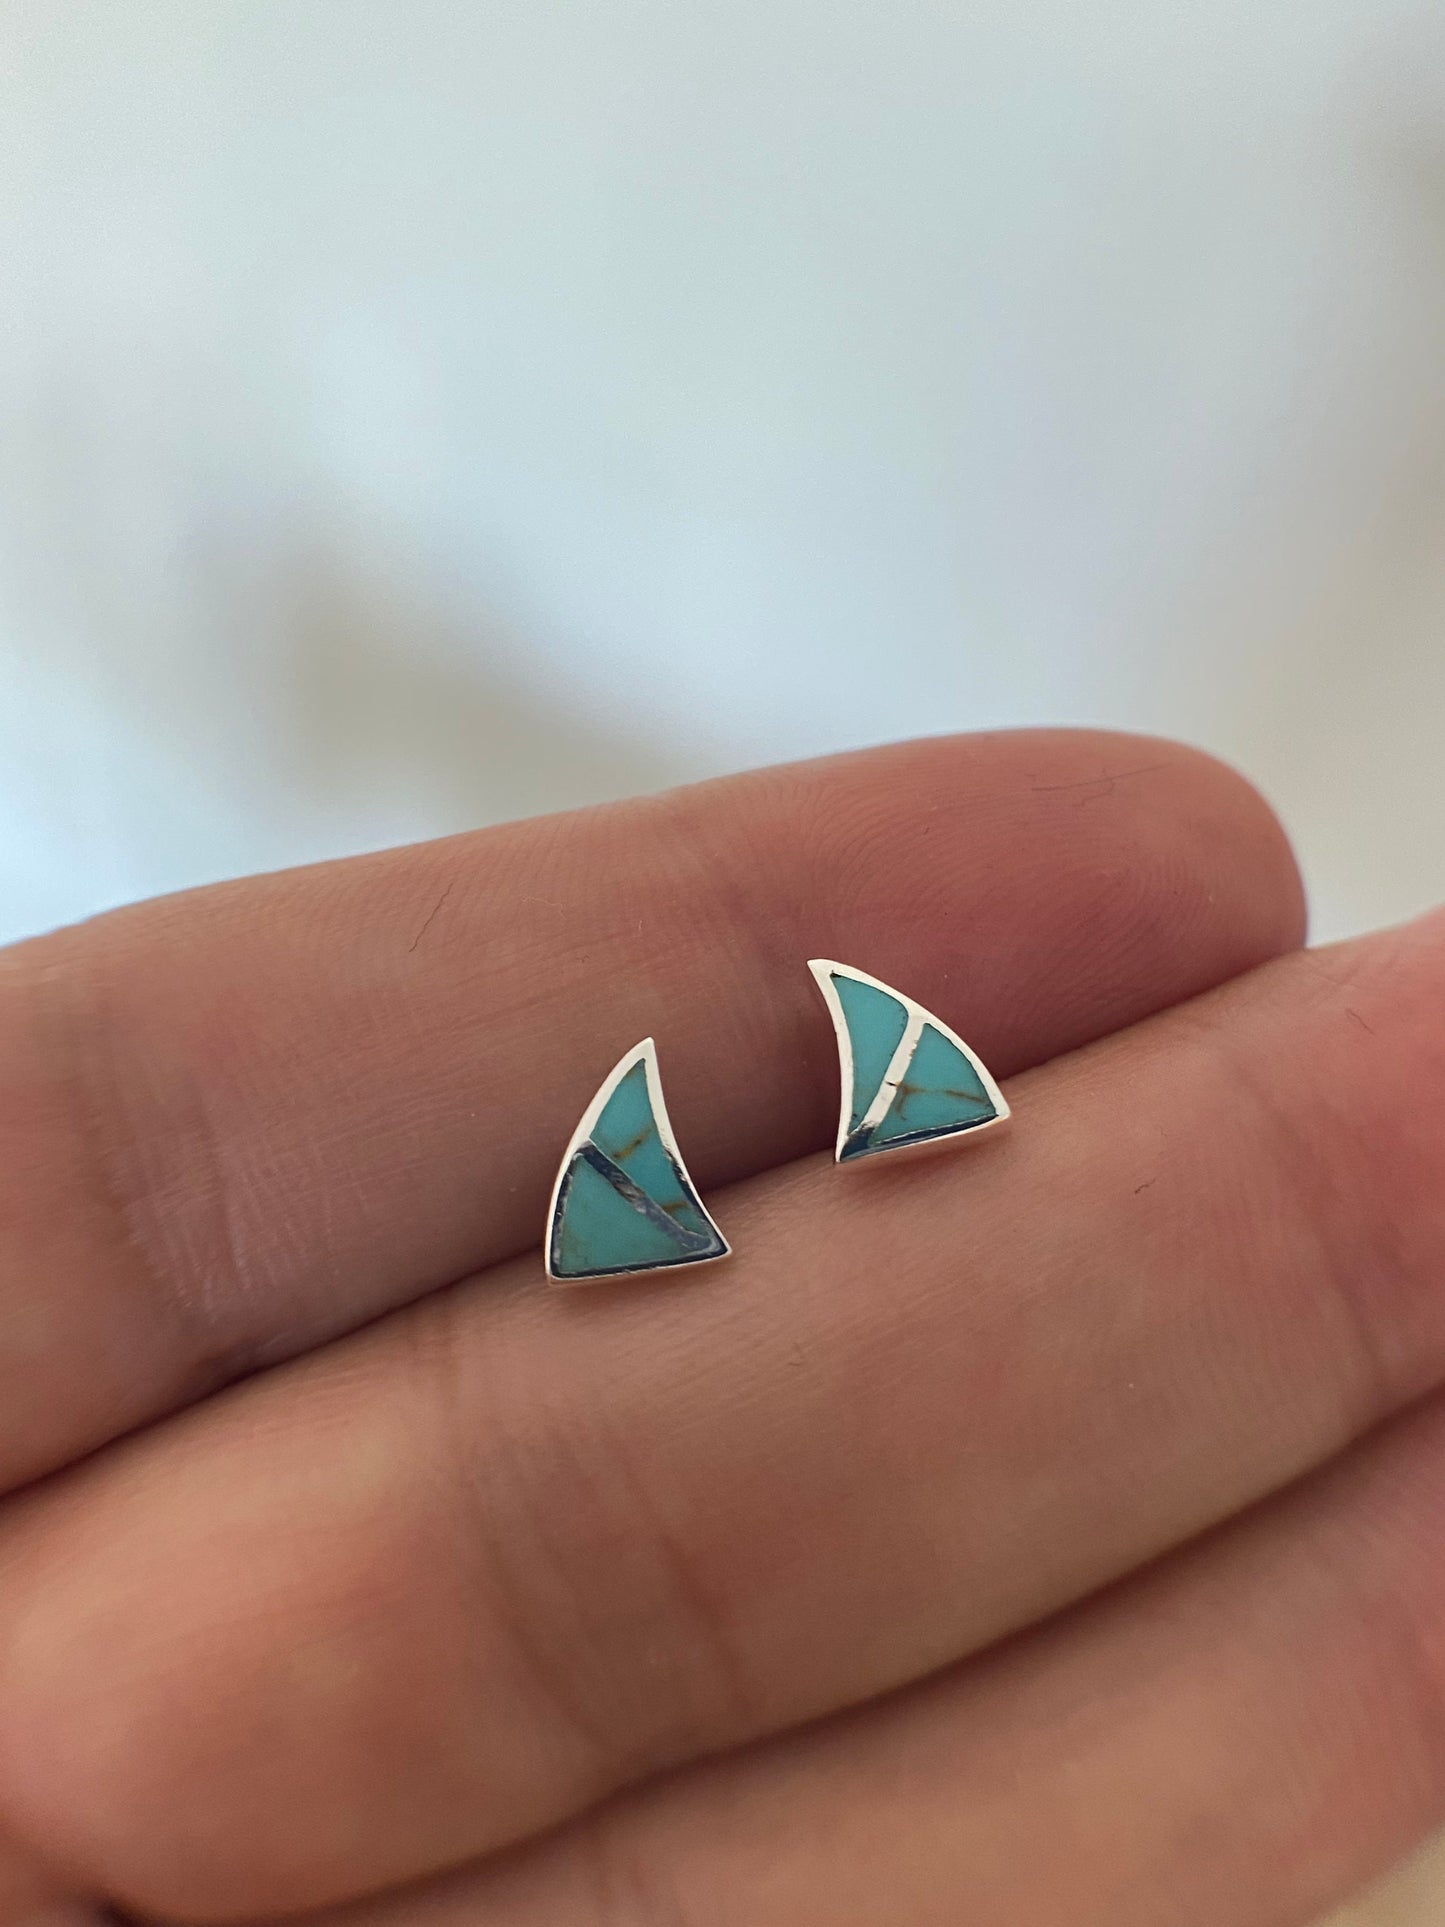 Turquoise sail earrings Sterling Silver 925 - TSE062